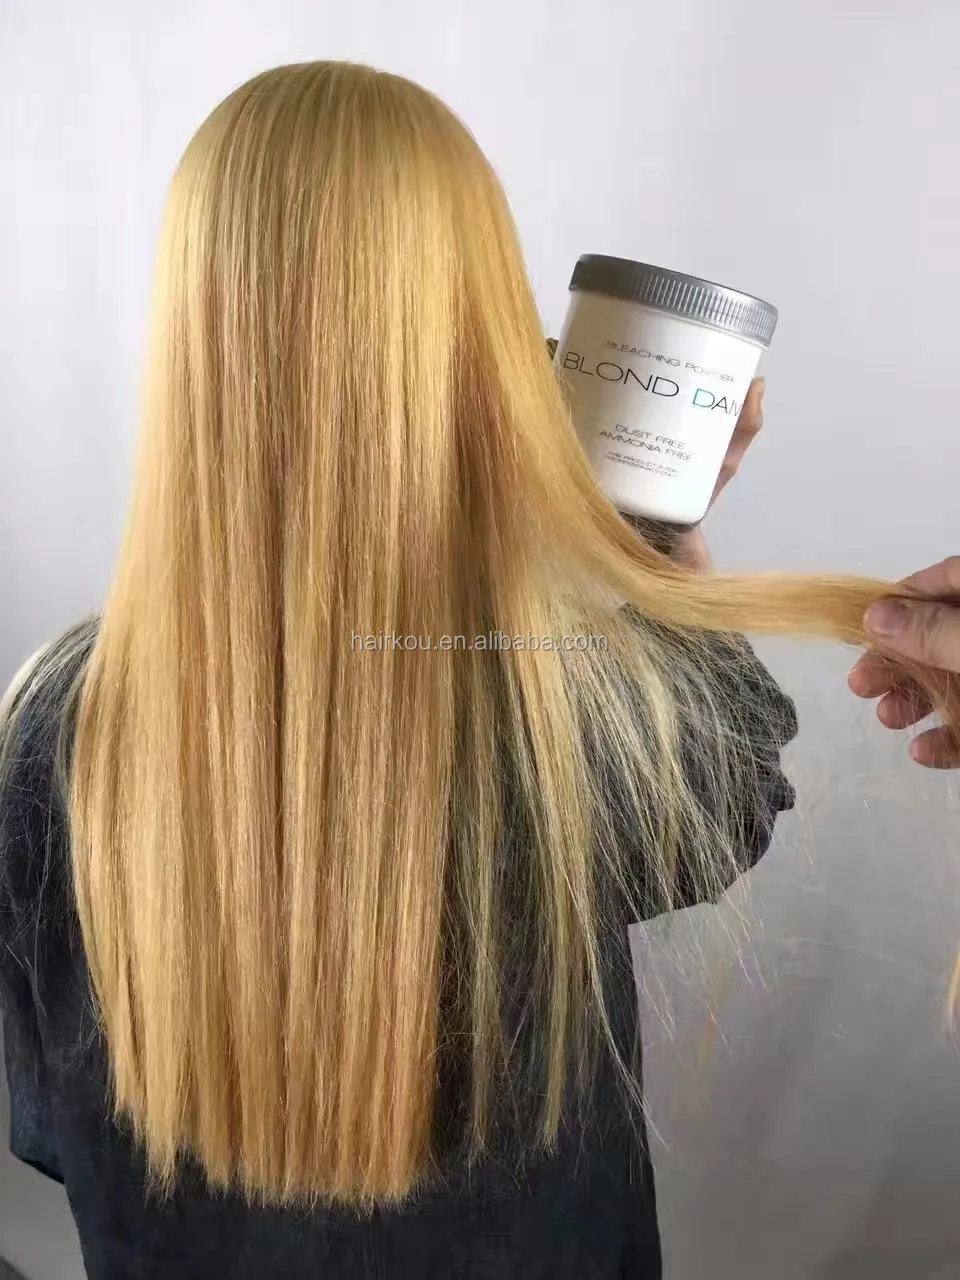 Rankous Best White Hair Color Bleach Powder 500g For Salon Use